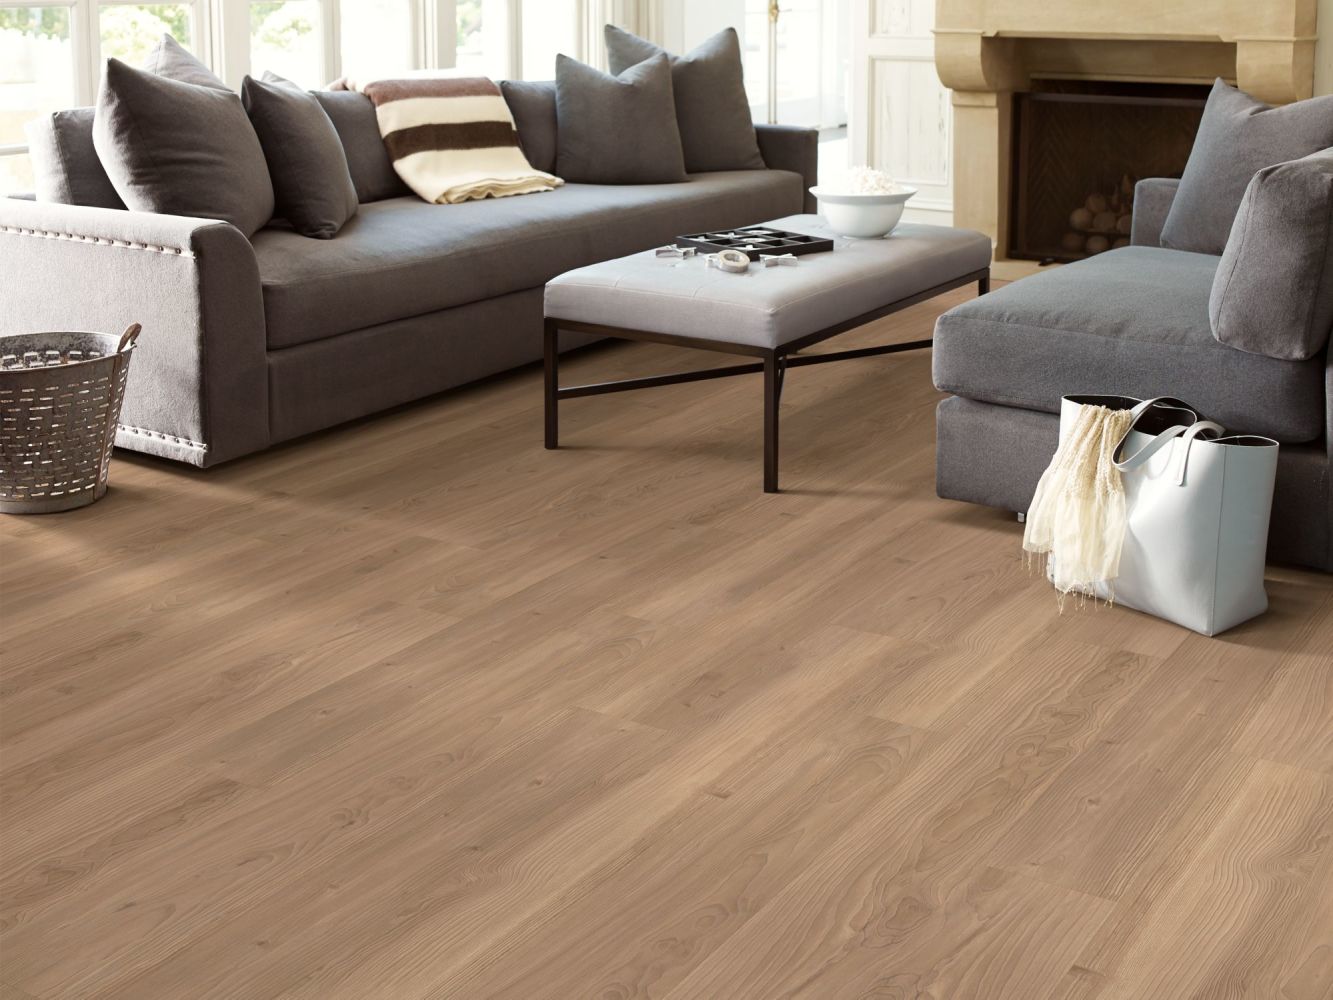 Shaw Floors Versalock Laminate Simplicity Plus Natural 02029_SL442